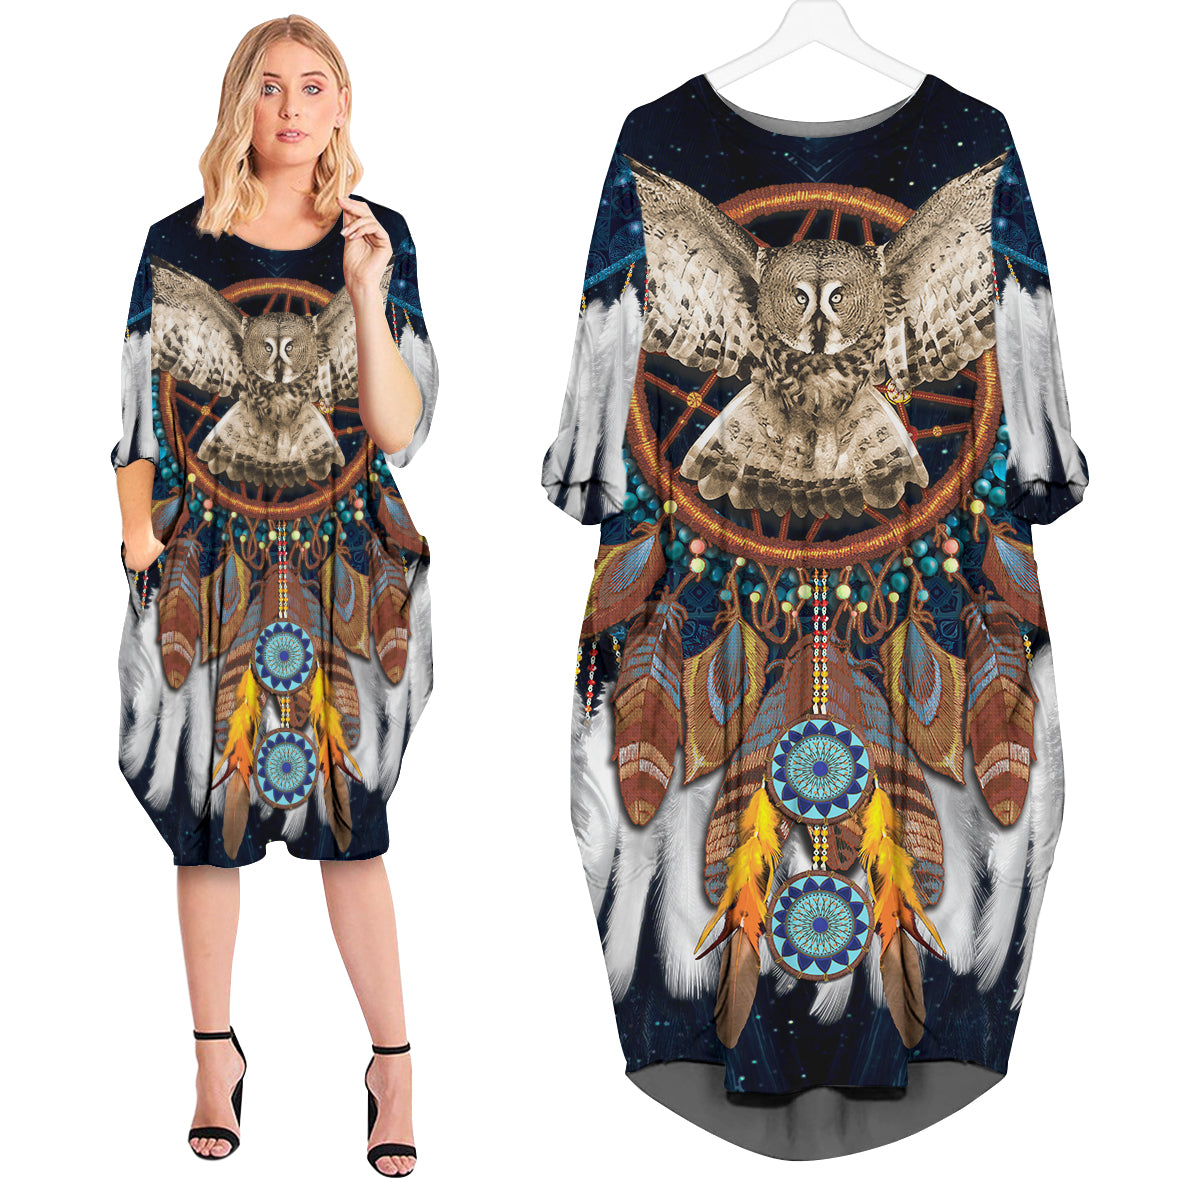 Magnificent Furry Dream Catcher Dress